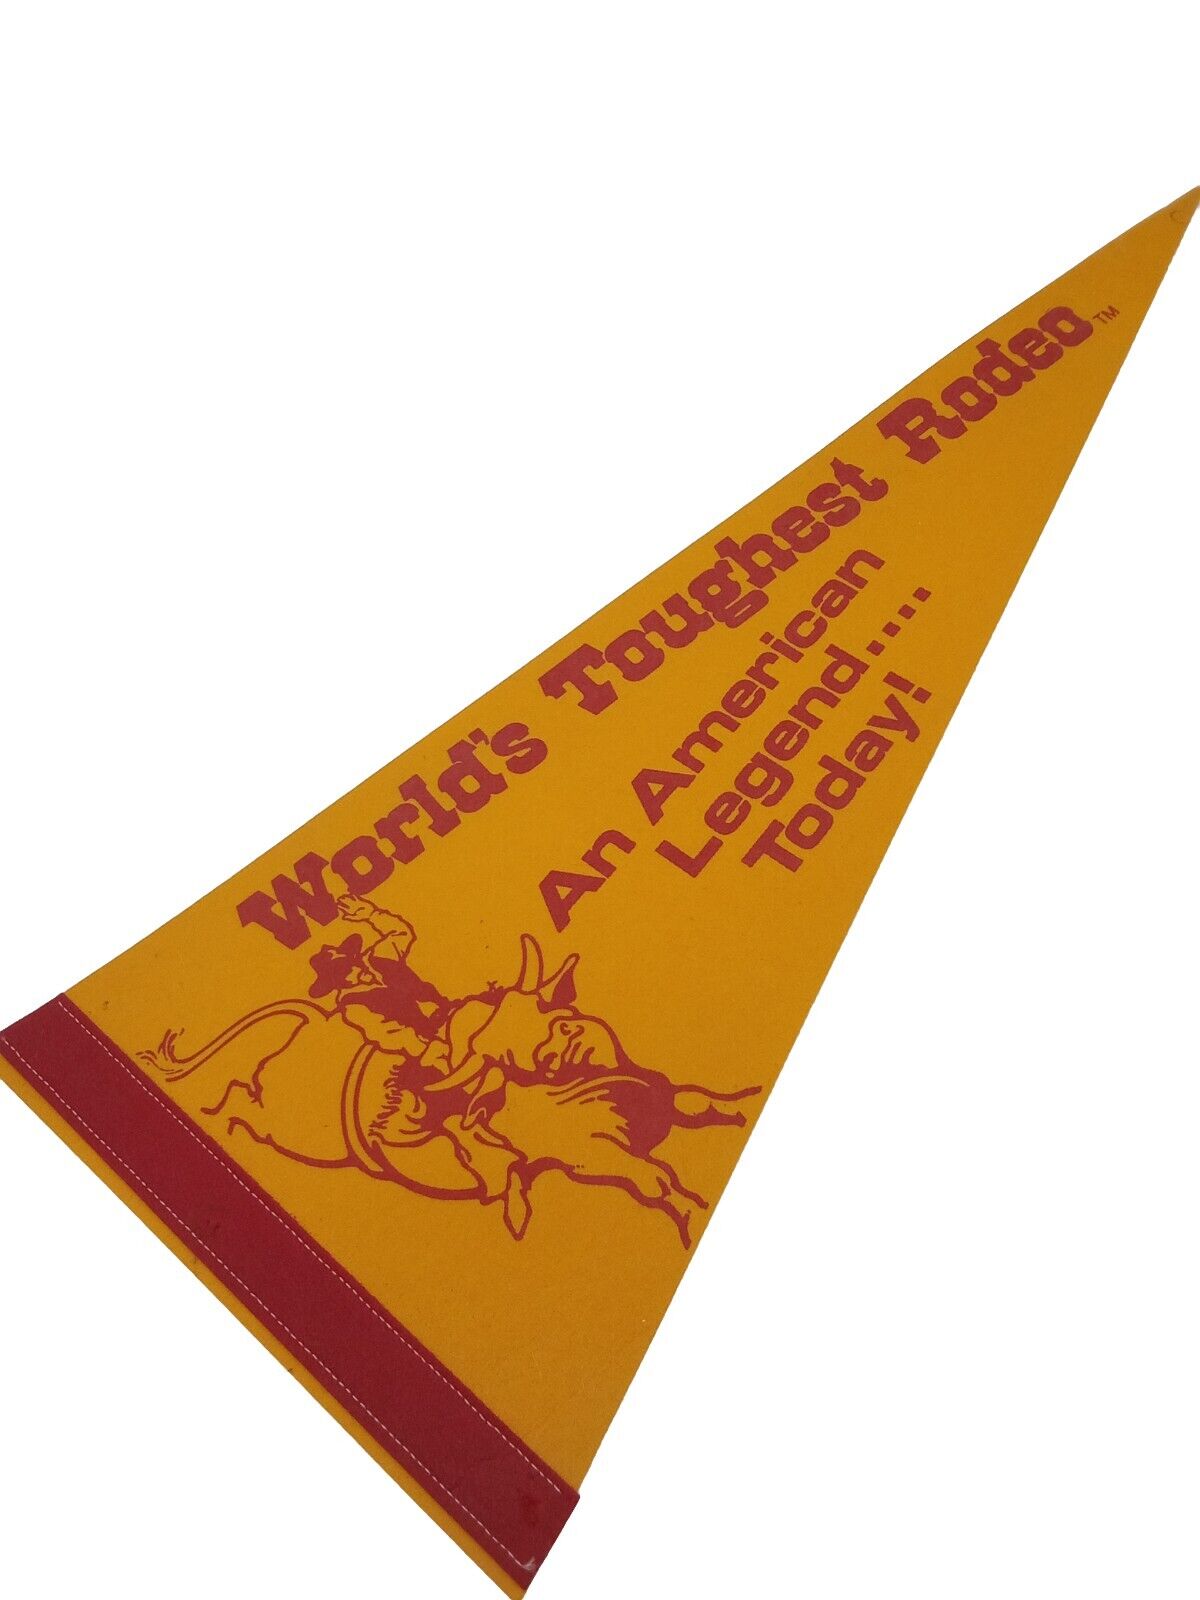 Vintage World's Toughest Rodeo An American Legend...Today Souvenir Pennant Flag 